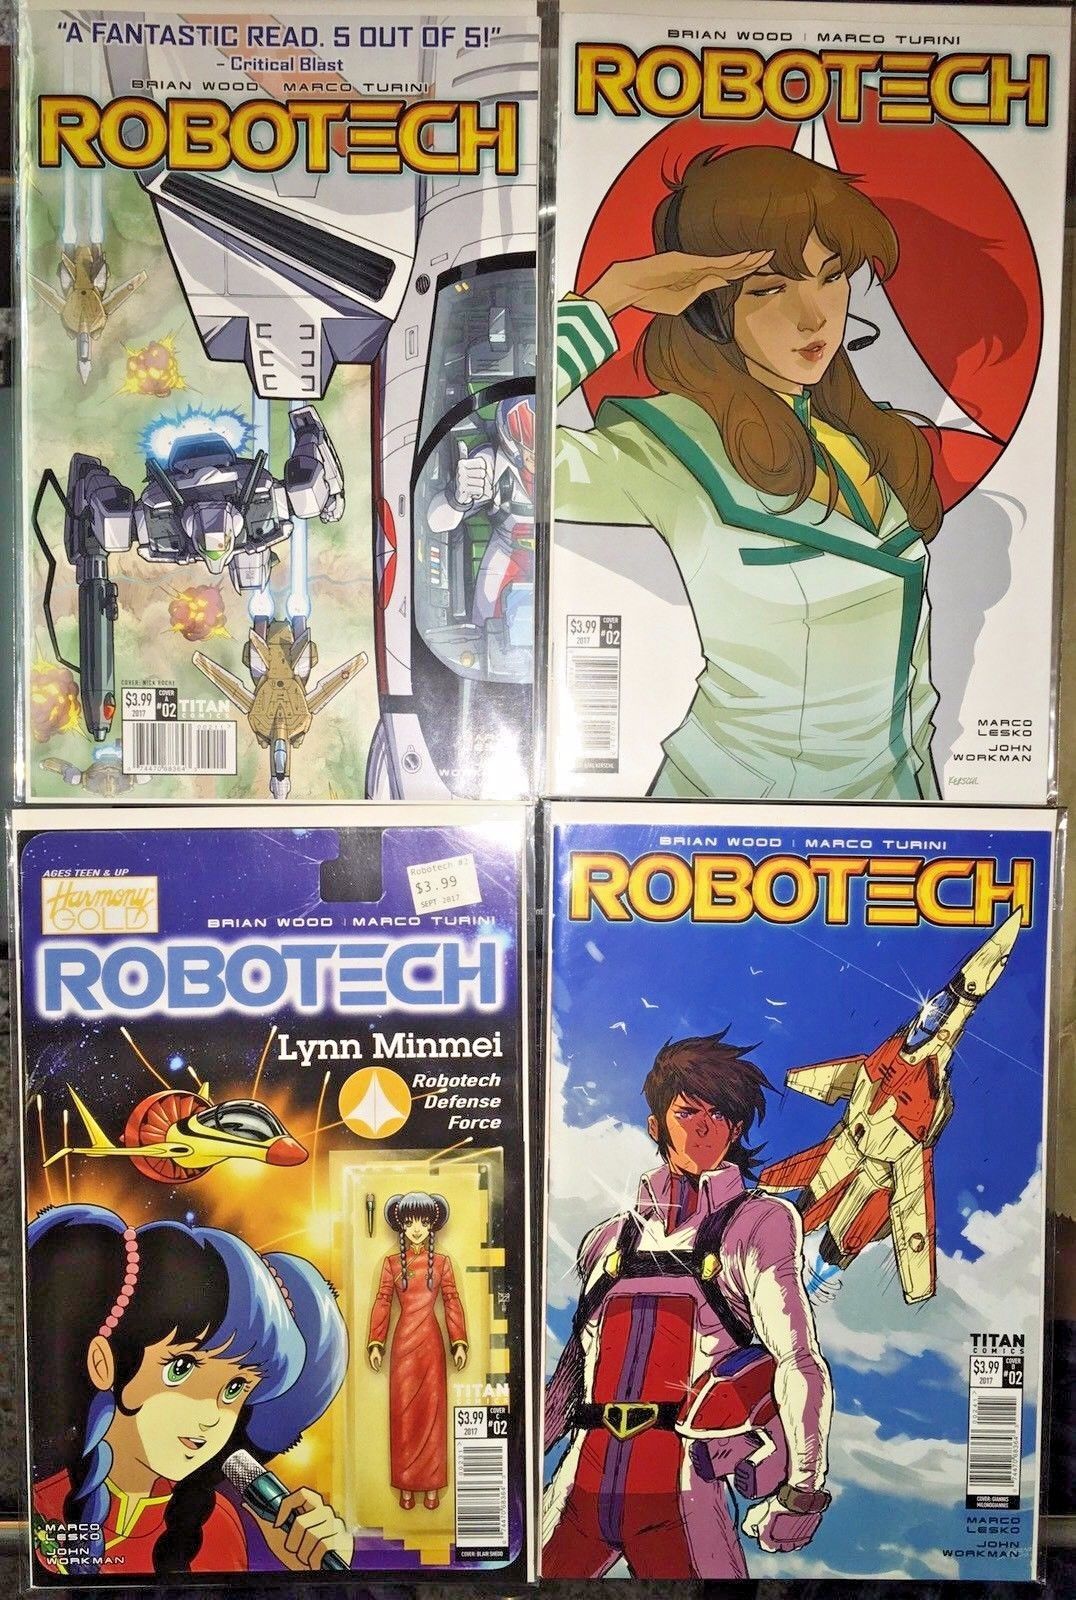 NEW Robotech comics by Titan Comics 2017 series